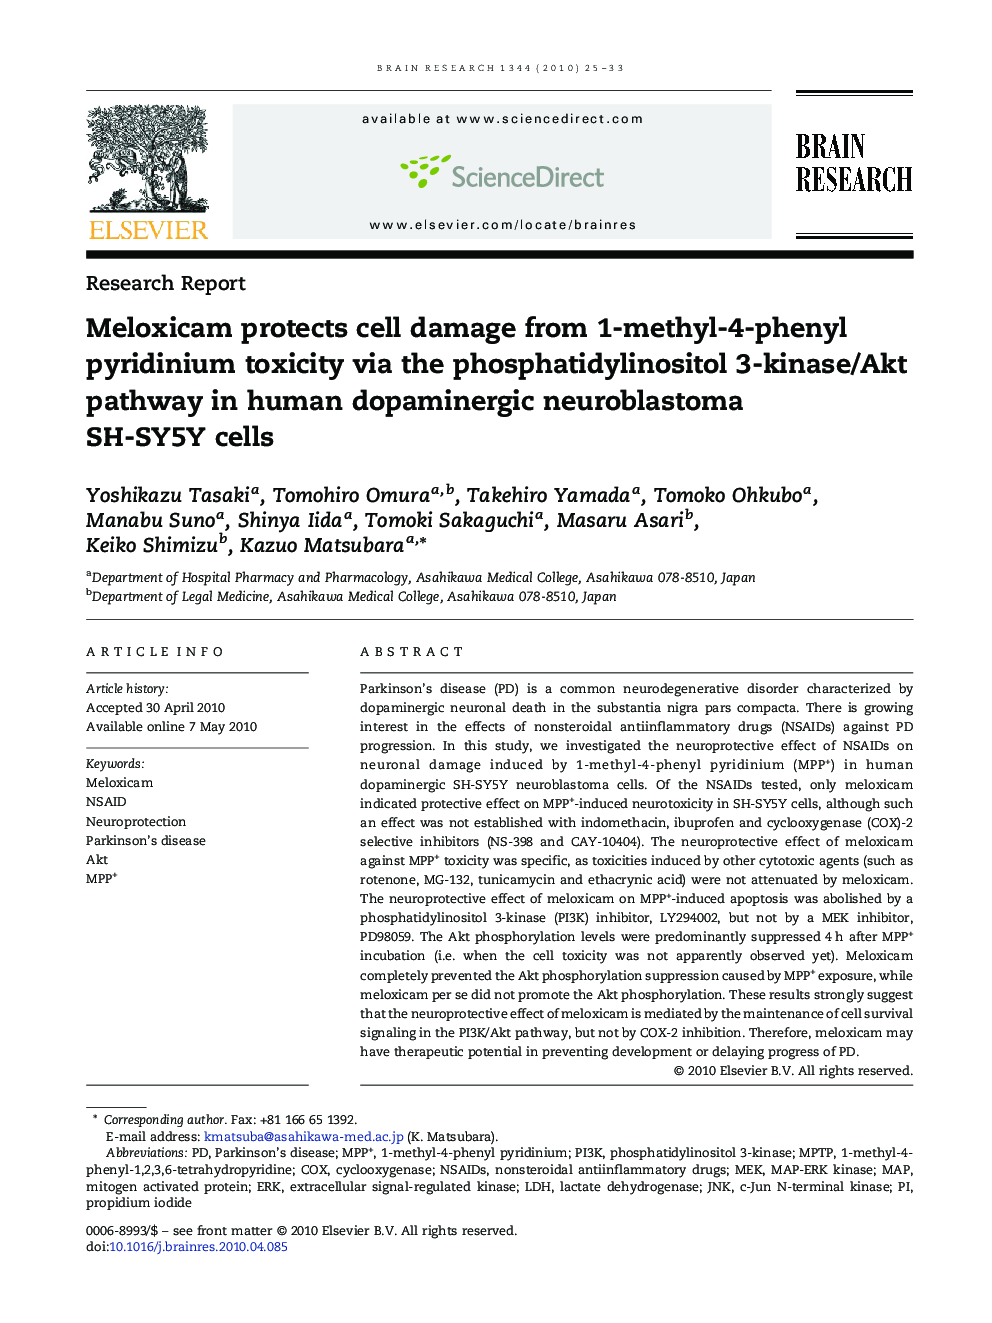 Meloxicam protects cell damage from 1-methyl-4-phenyl pyridinium toxicity via the phosphatidylinositol 3-kinase/Akt pathway in human dopaminergic neuroblastoma SH-SY5Y cells